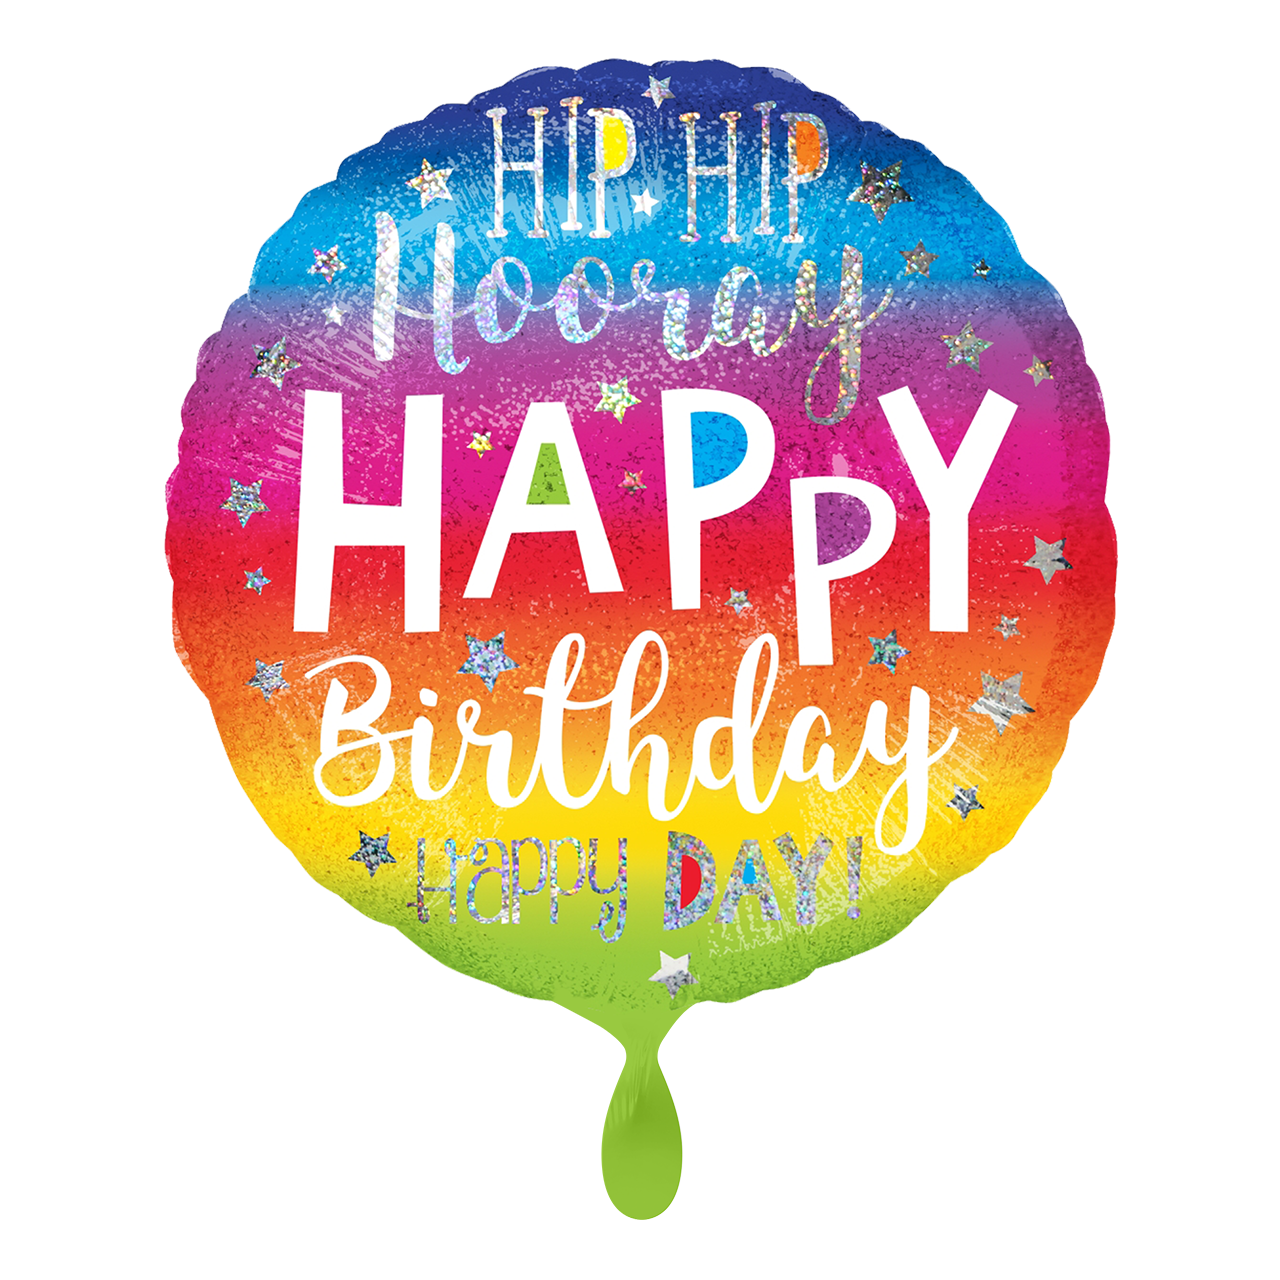 Vorschau: 1 Ballon - Hip Hip Hooray Birthday